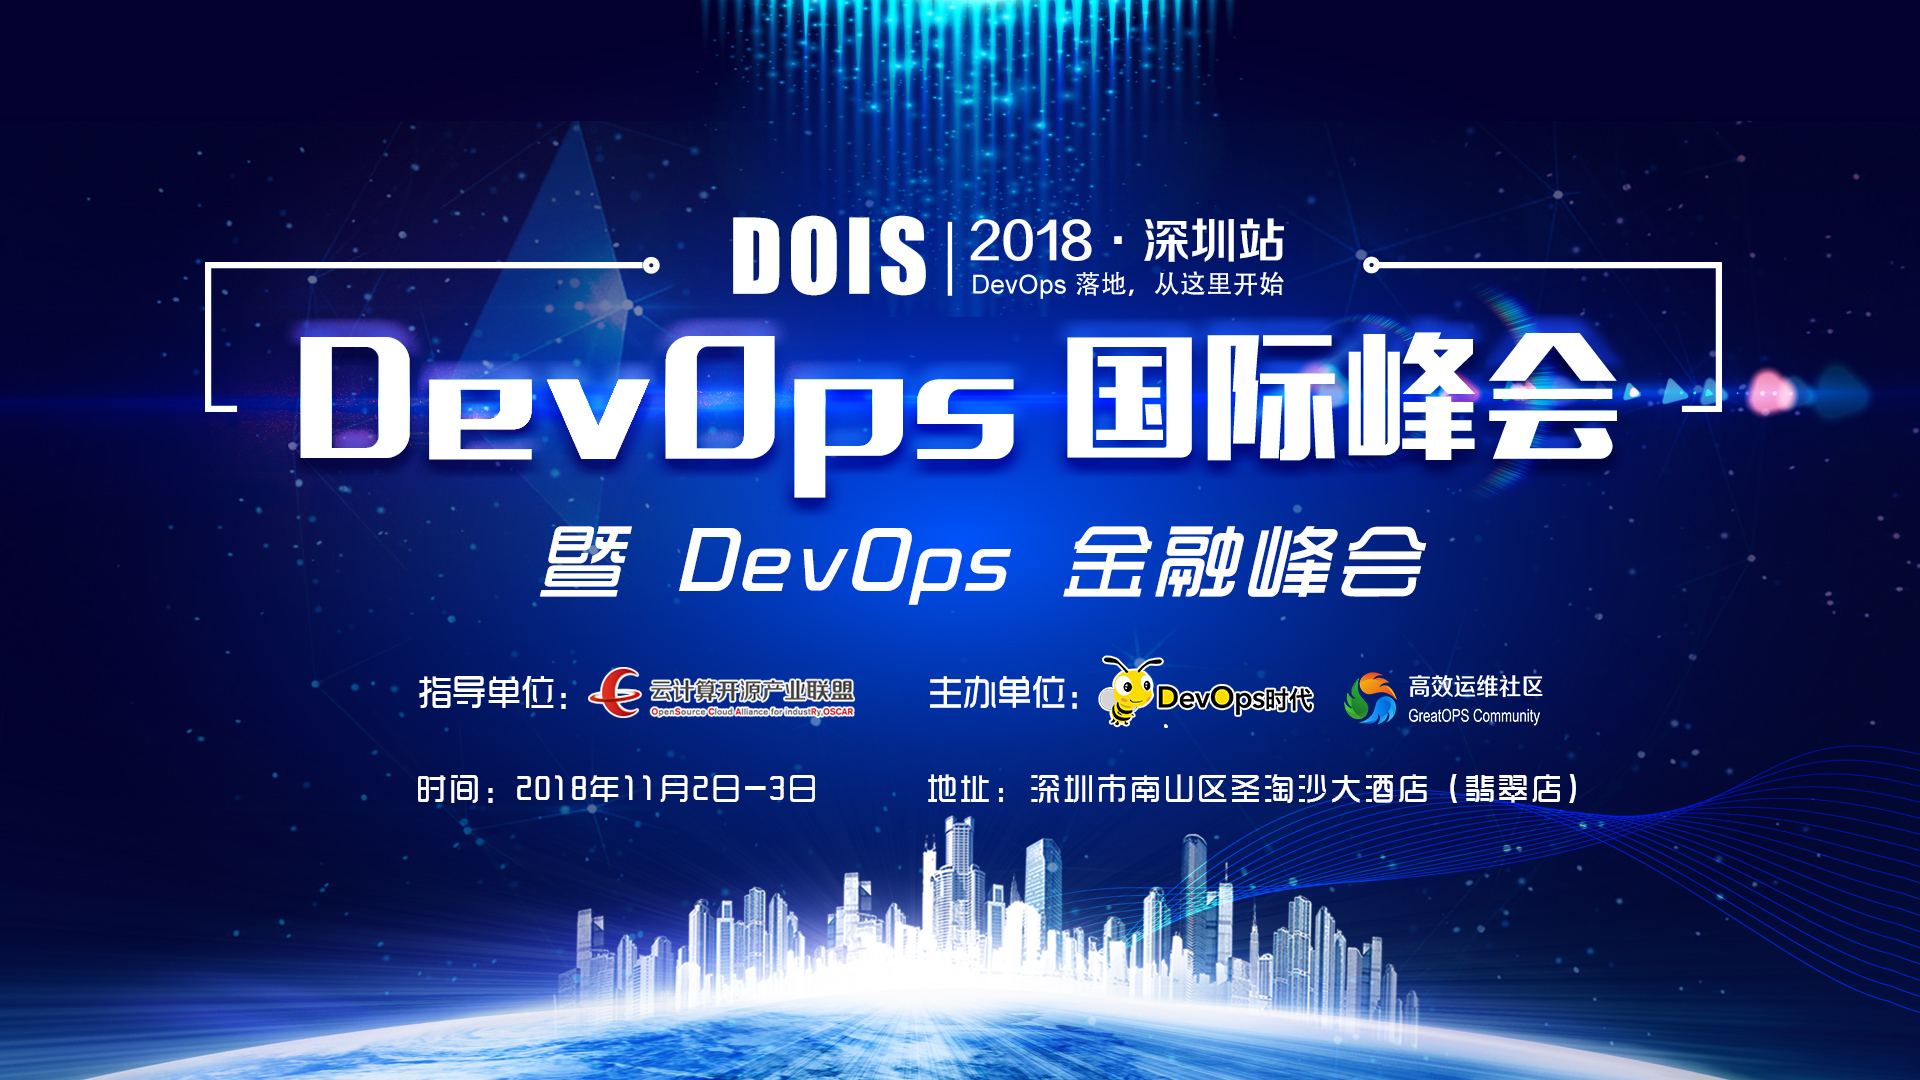 DevOps 国际峰会 暨 DevOps 金融峰会 2018·深圳